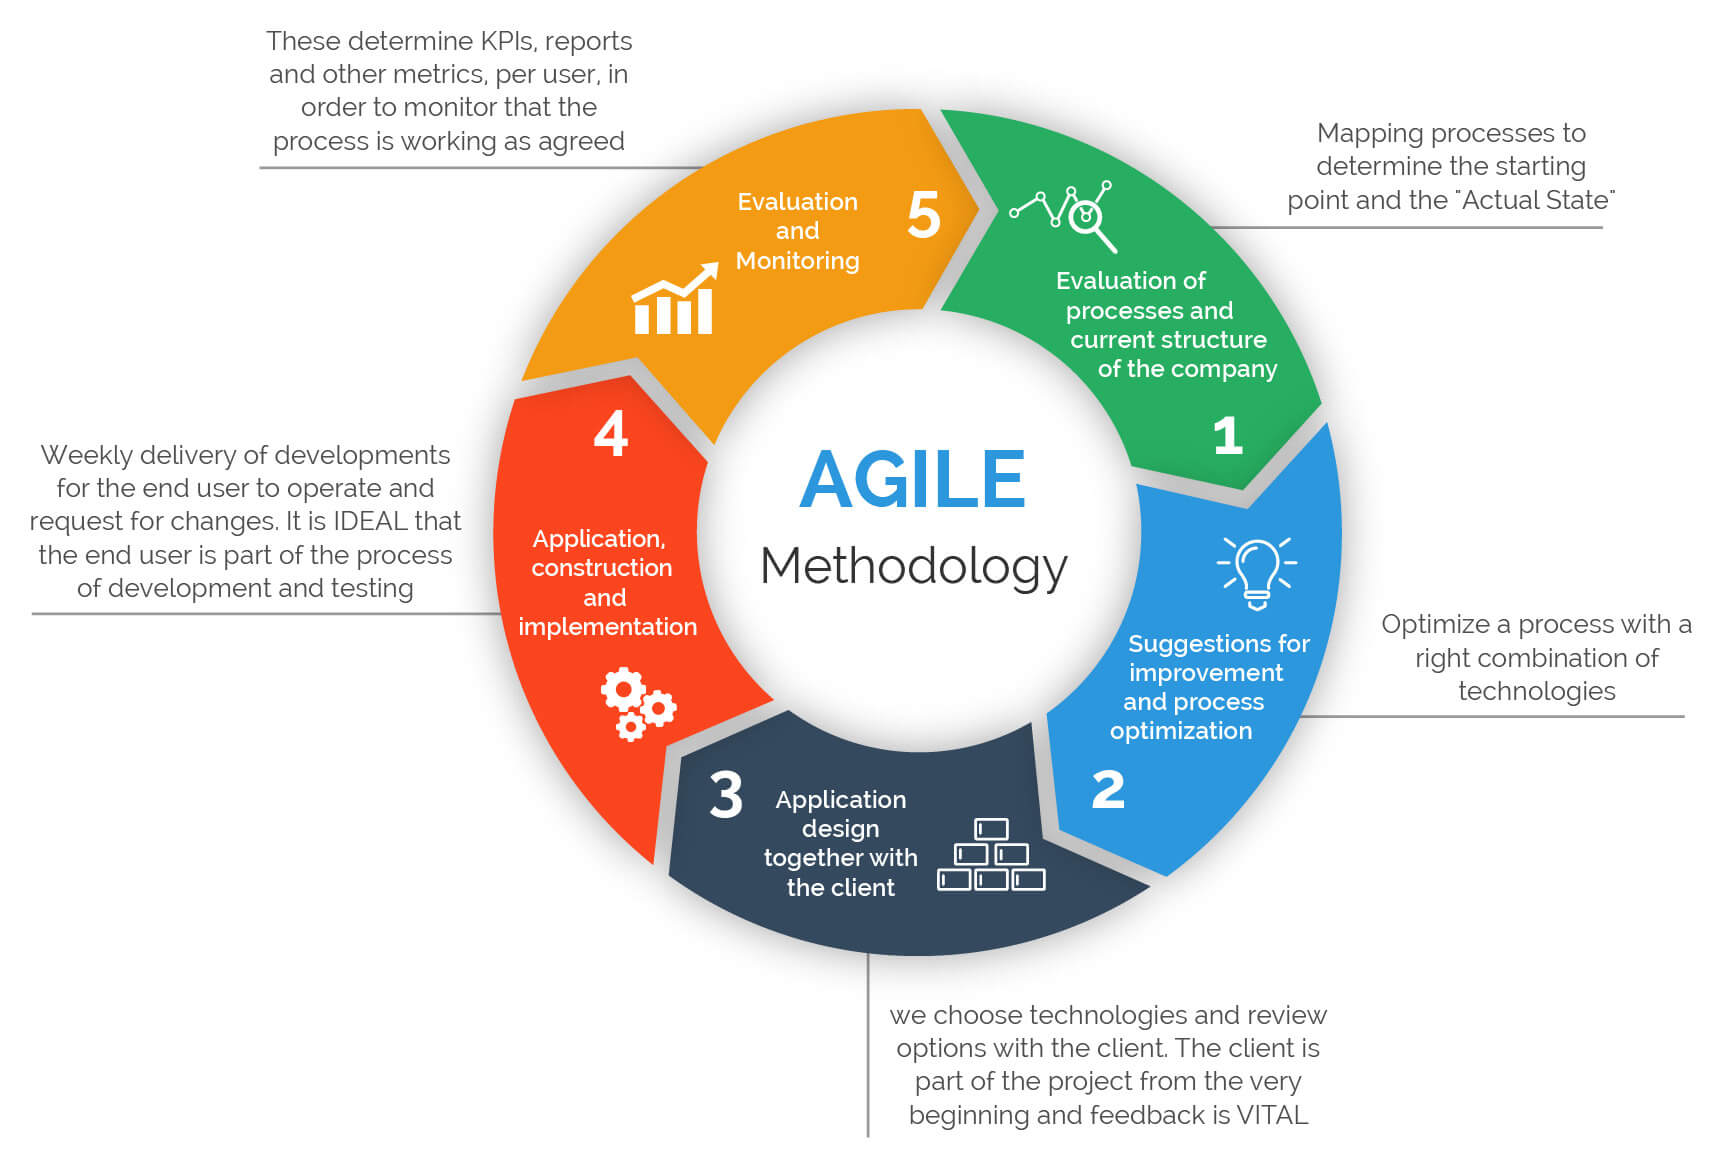 why Agile methodology?